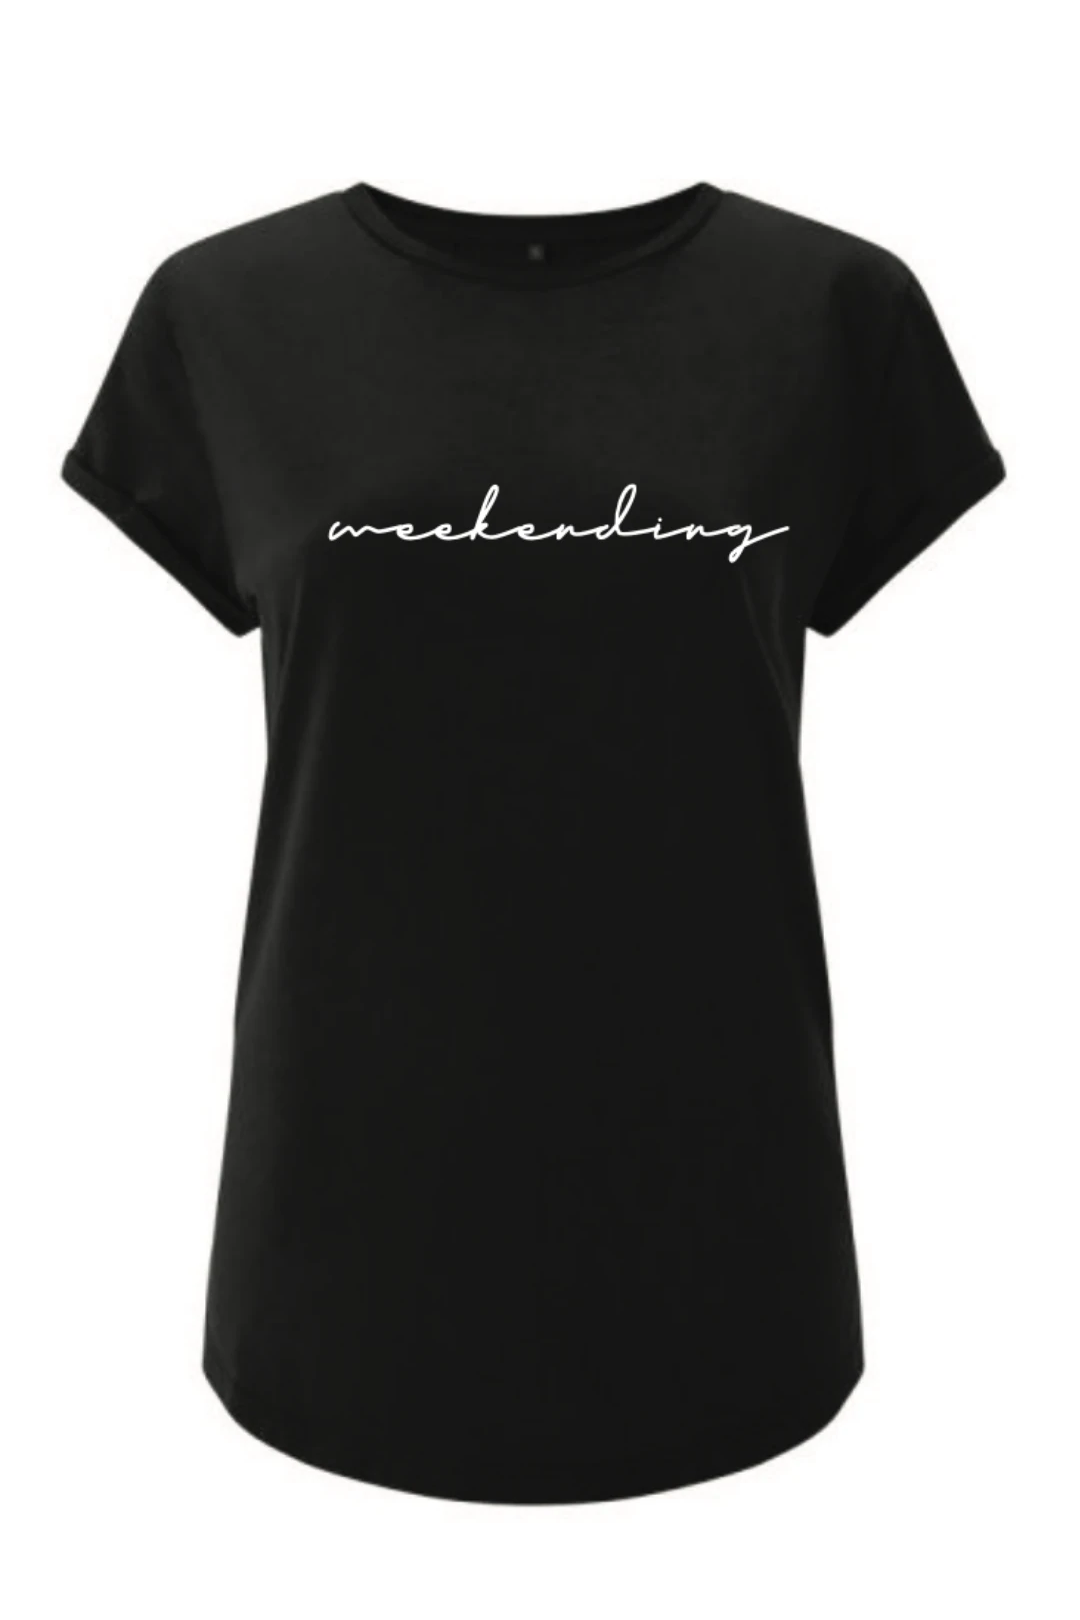 Weekending T Shirt | Black x White